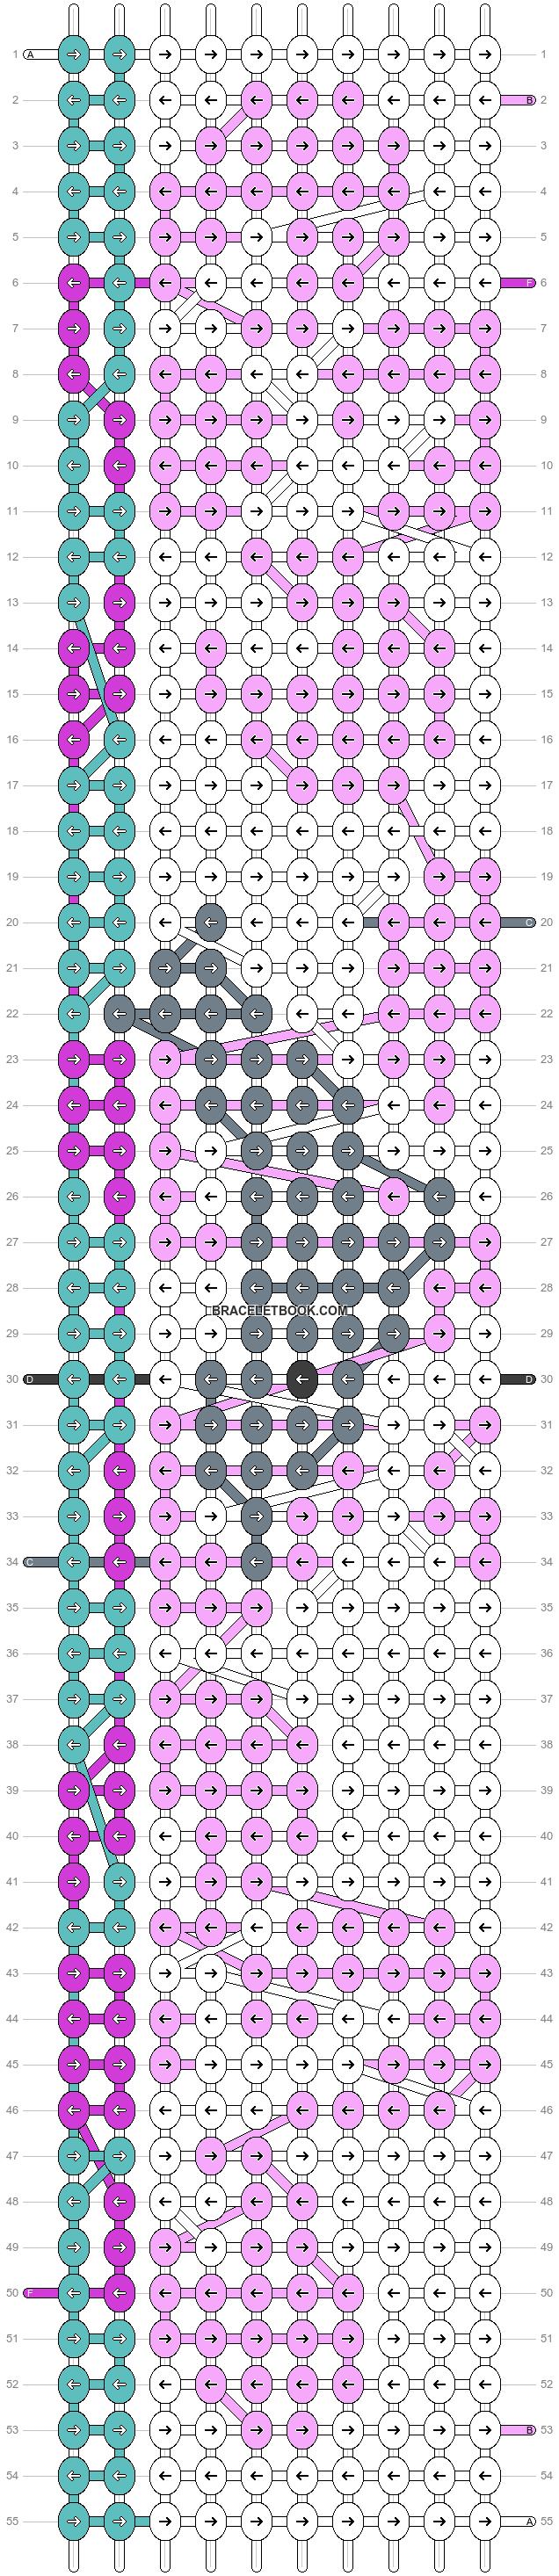 Alpha pattern #9531 variation #9040 pattern